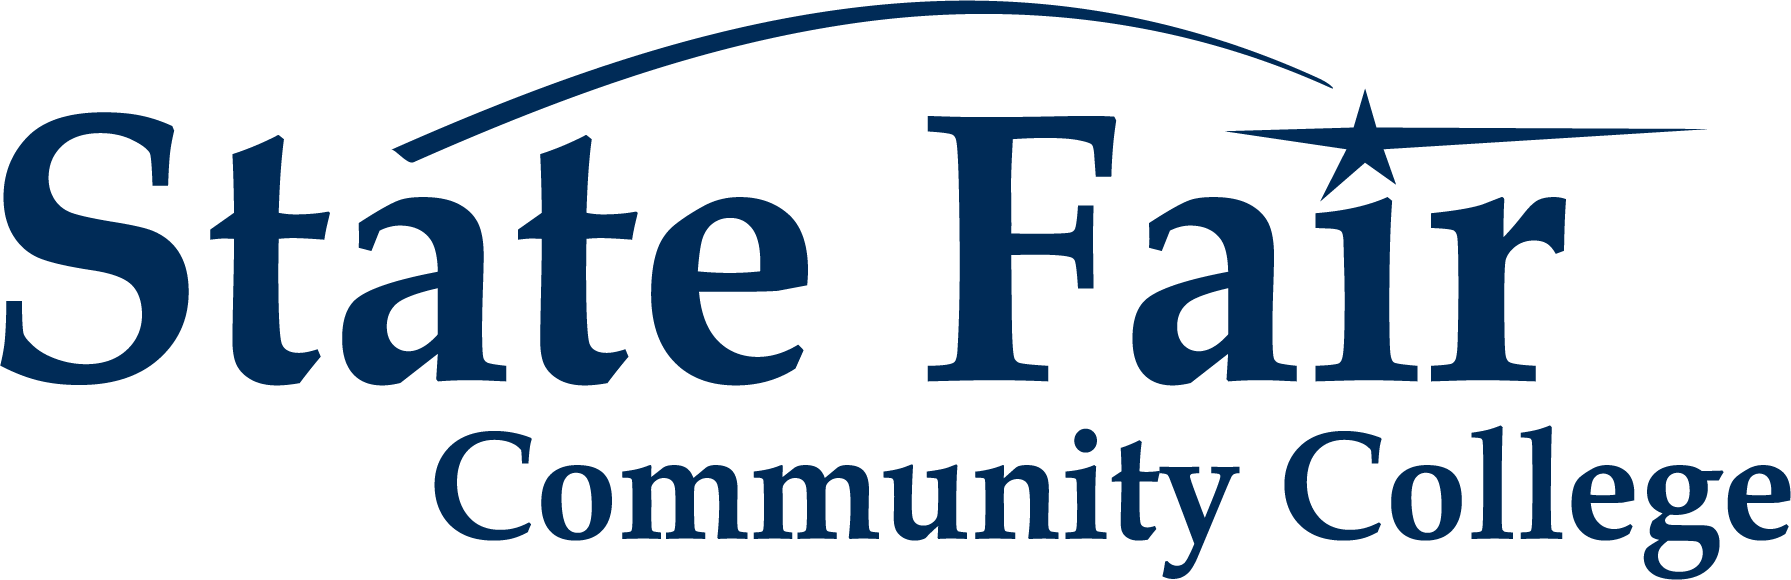 statefaircc-logo-navy88.png